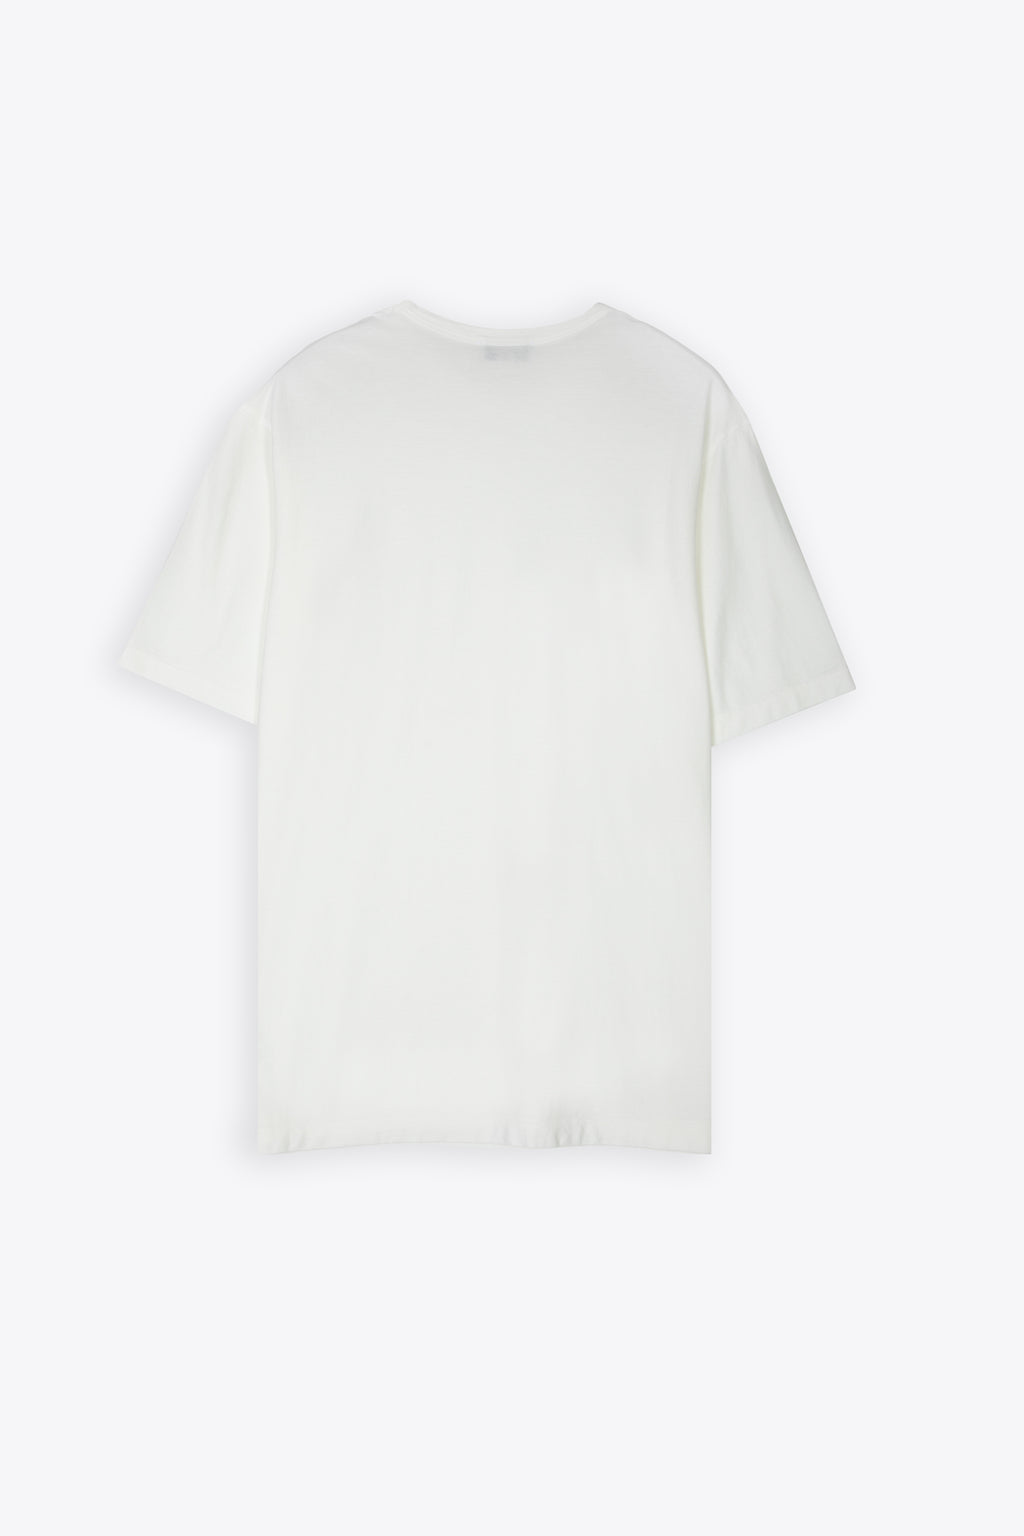 alt-image__White-lightweight-cotton-t-shirt